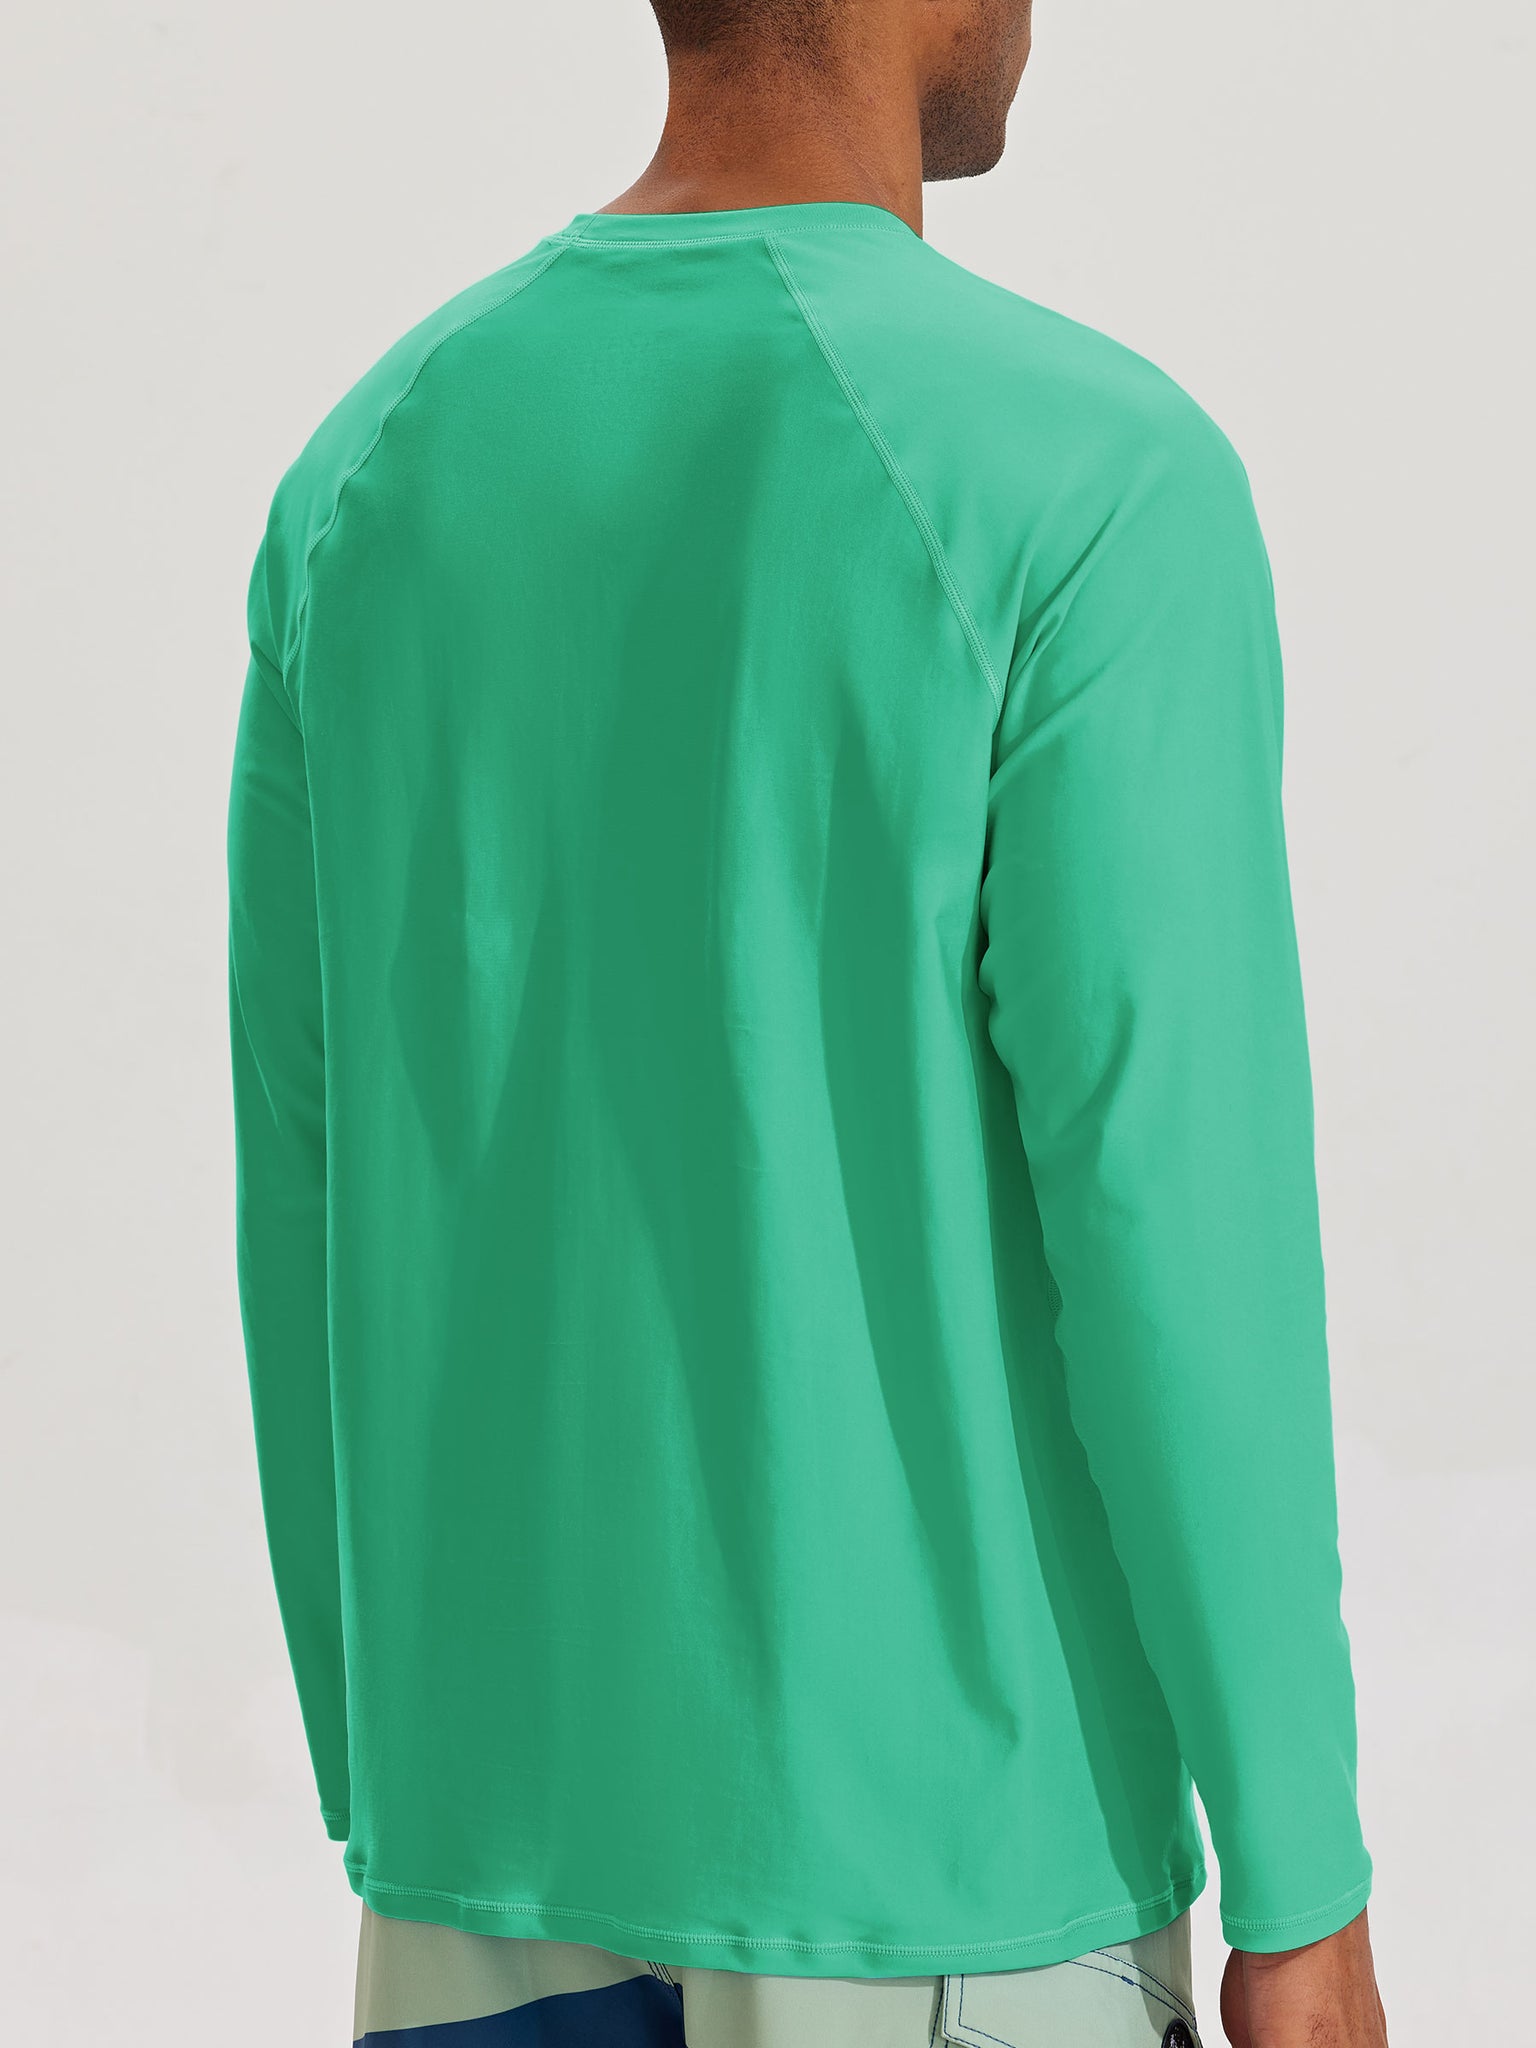 Men's Sun Protection Long Sleeve Shirt_Green_model3